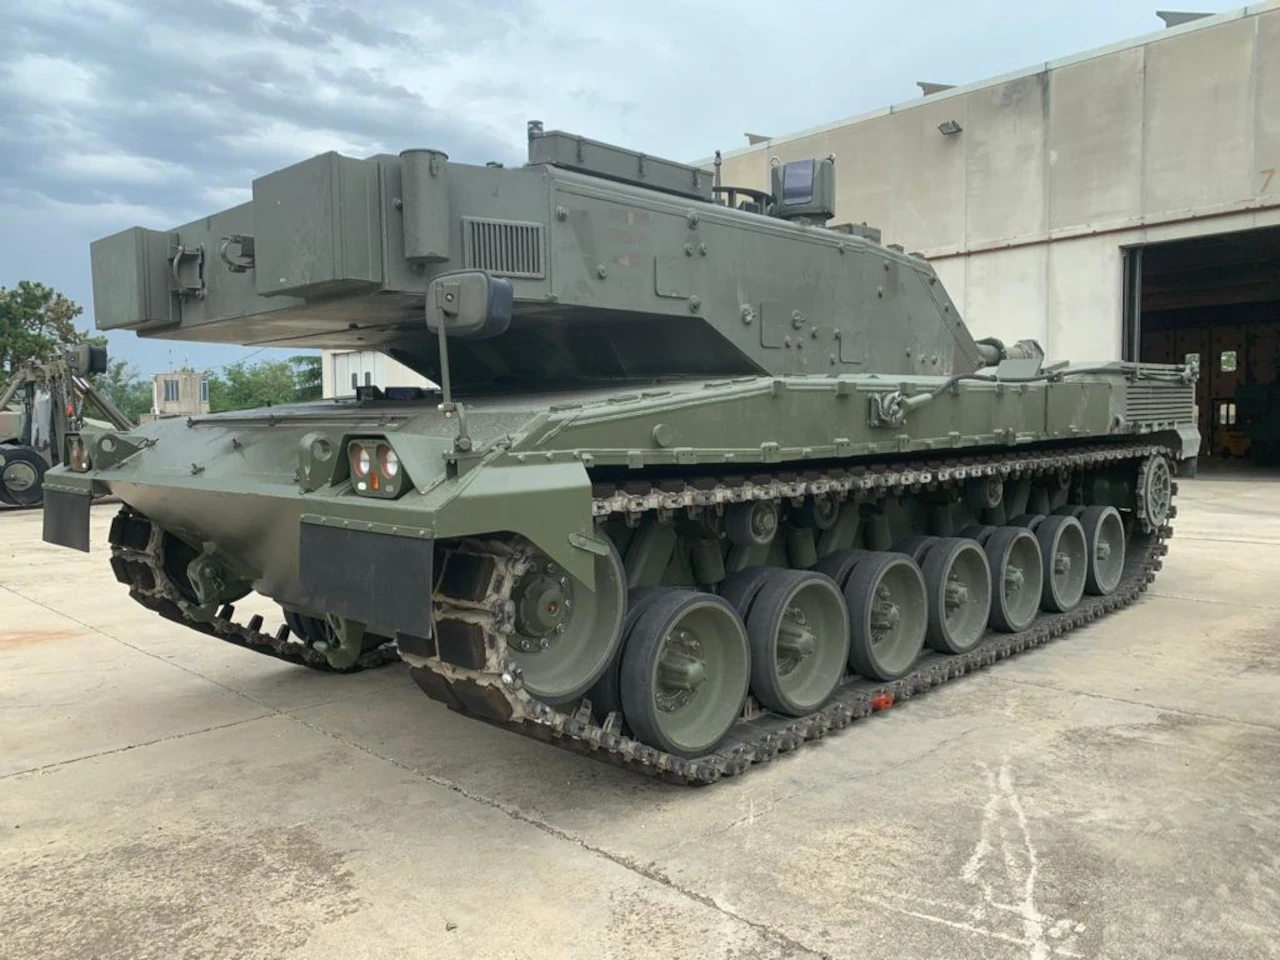 The first prototype AMV PT1 of the modernized Italian Ariete AMV tank